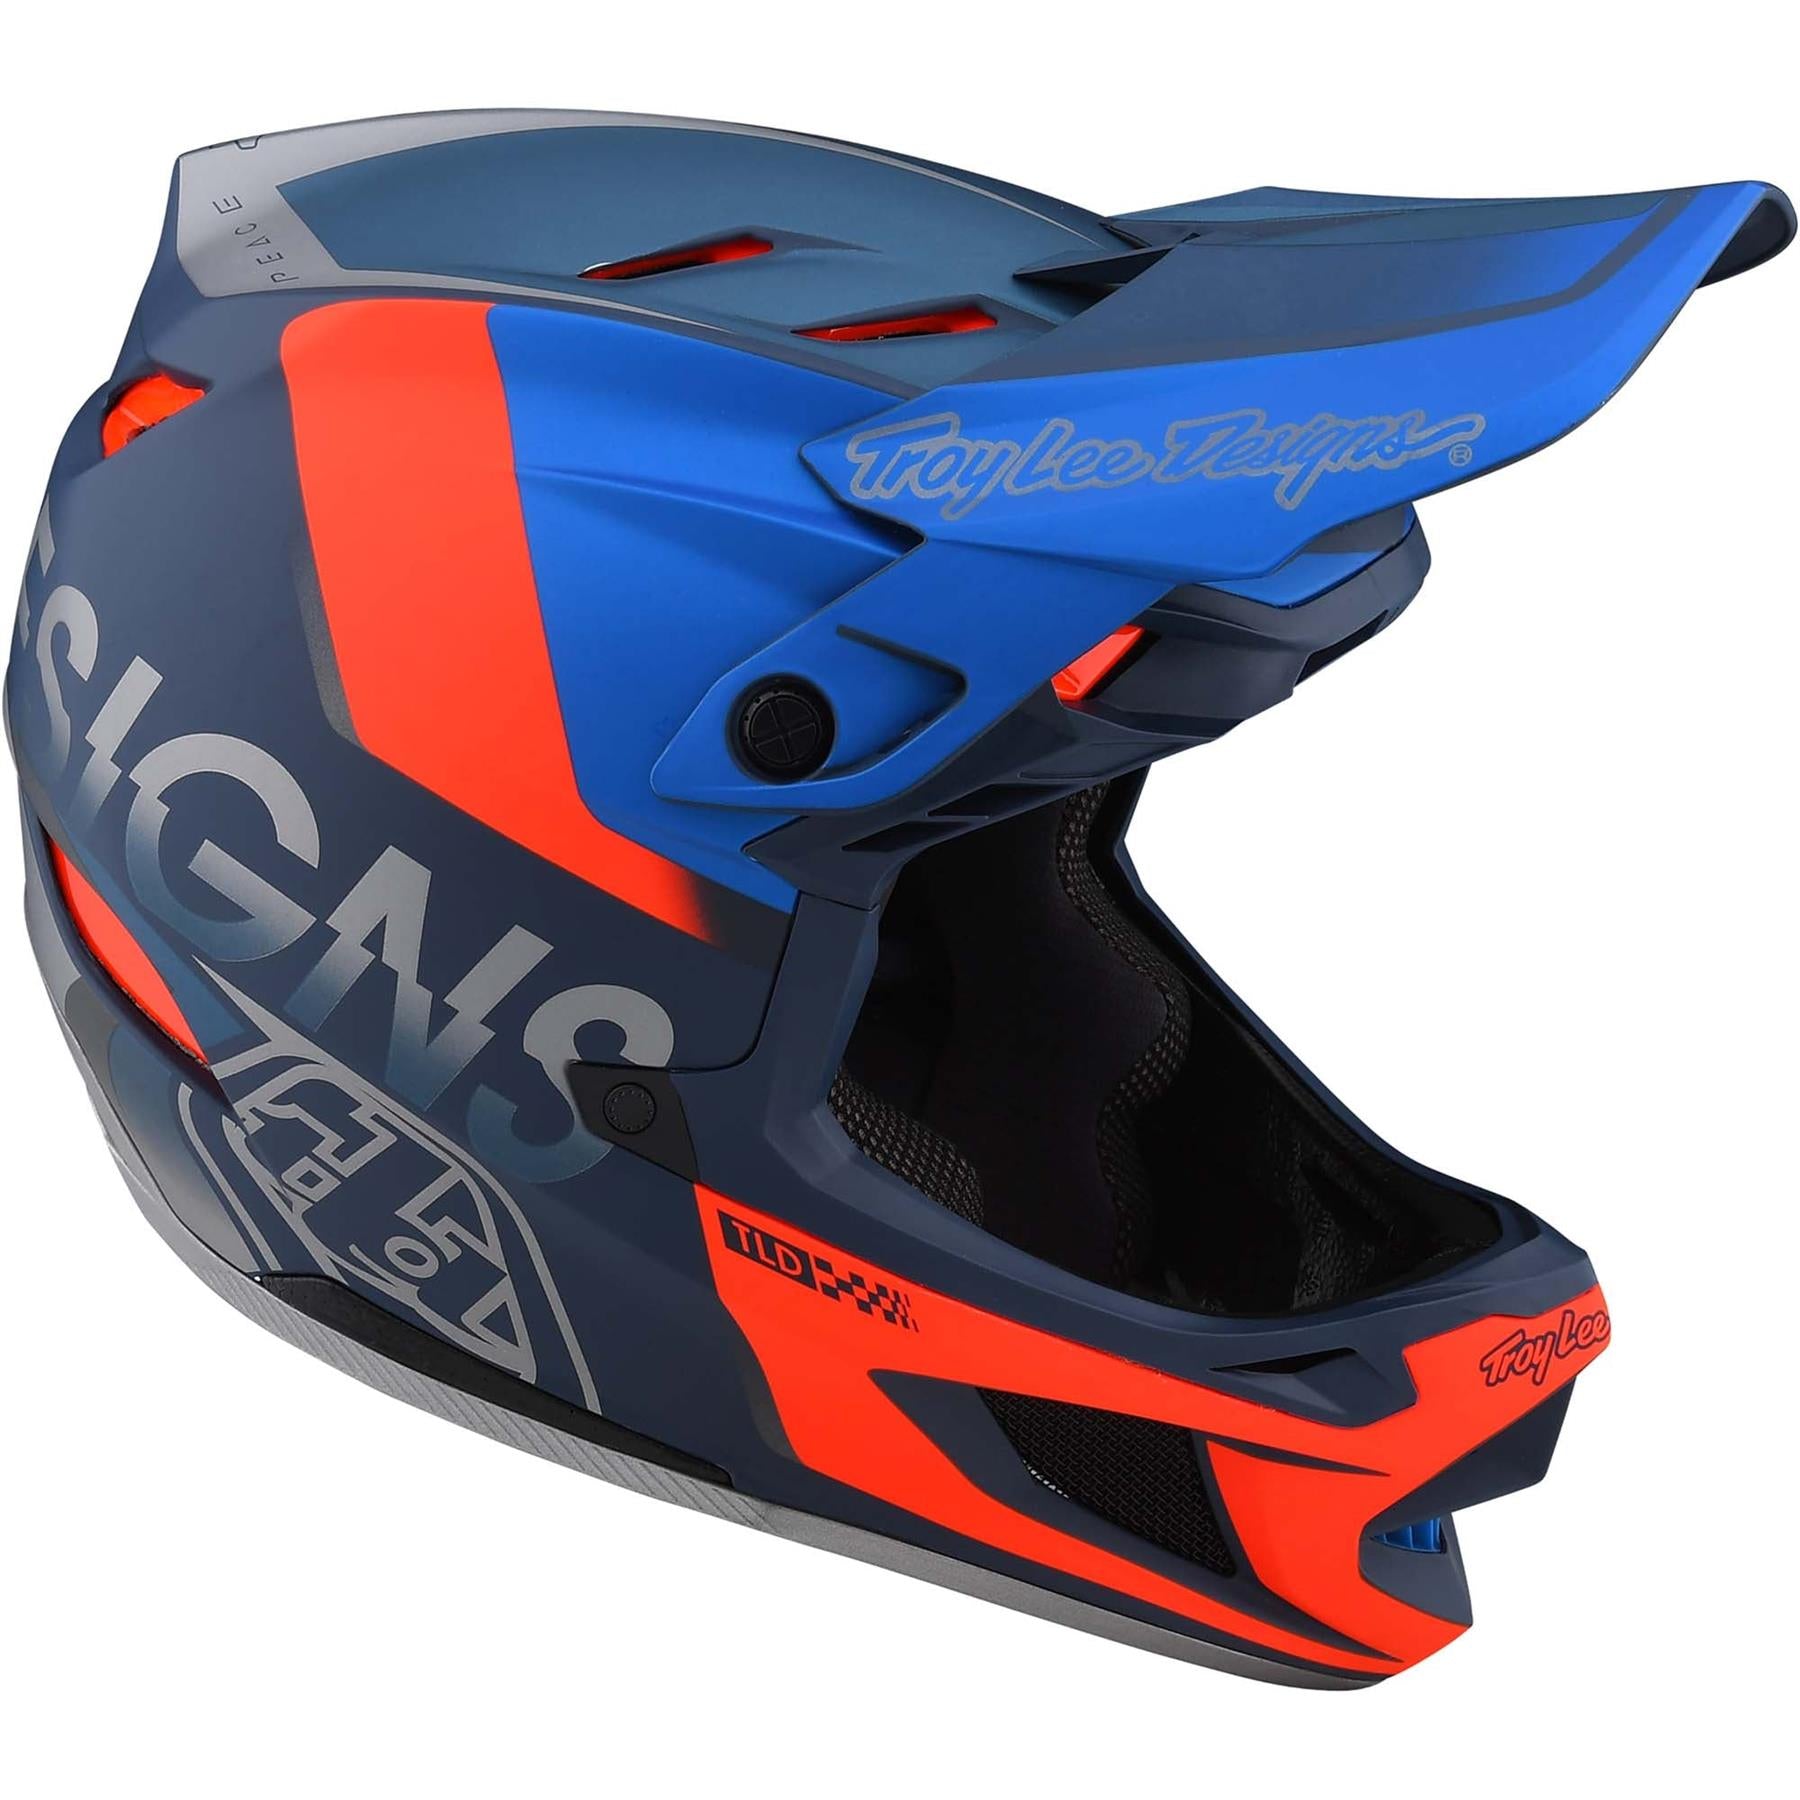 Photos - Bike Helmet Troy Lee D4 Composite Race Helmet - Qualifier Slate/Red Medium SG30242